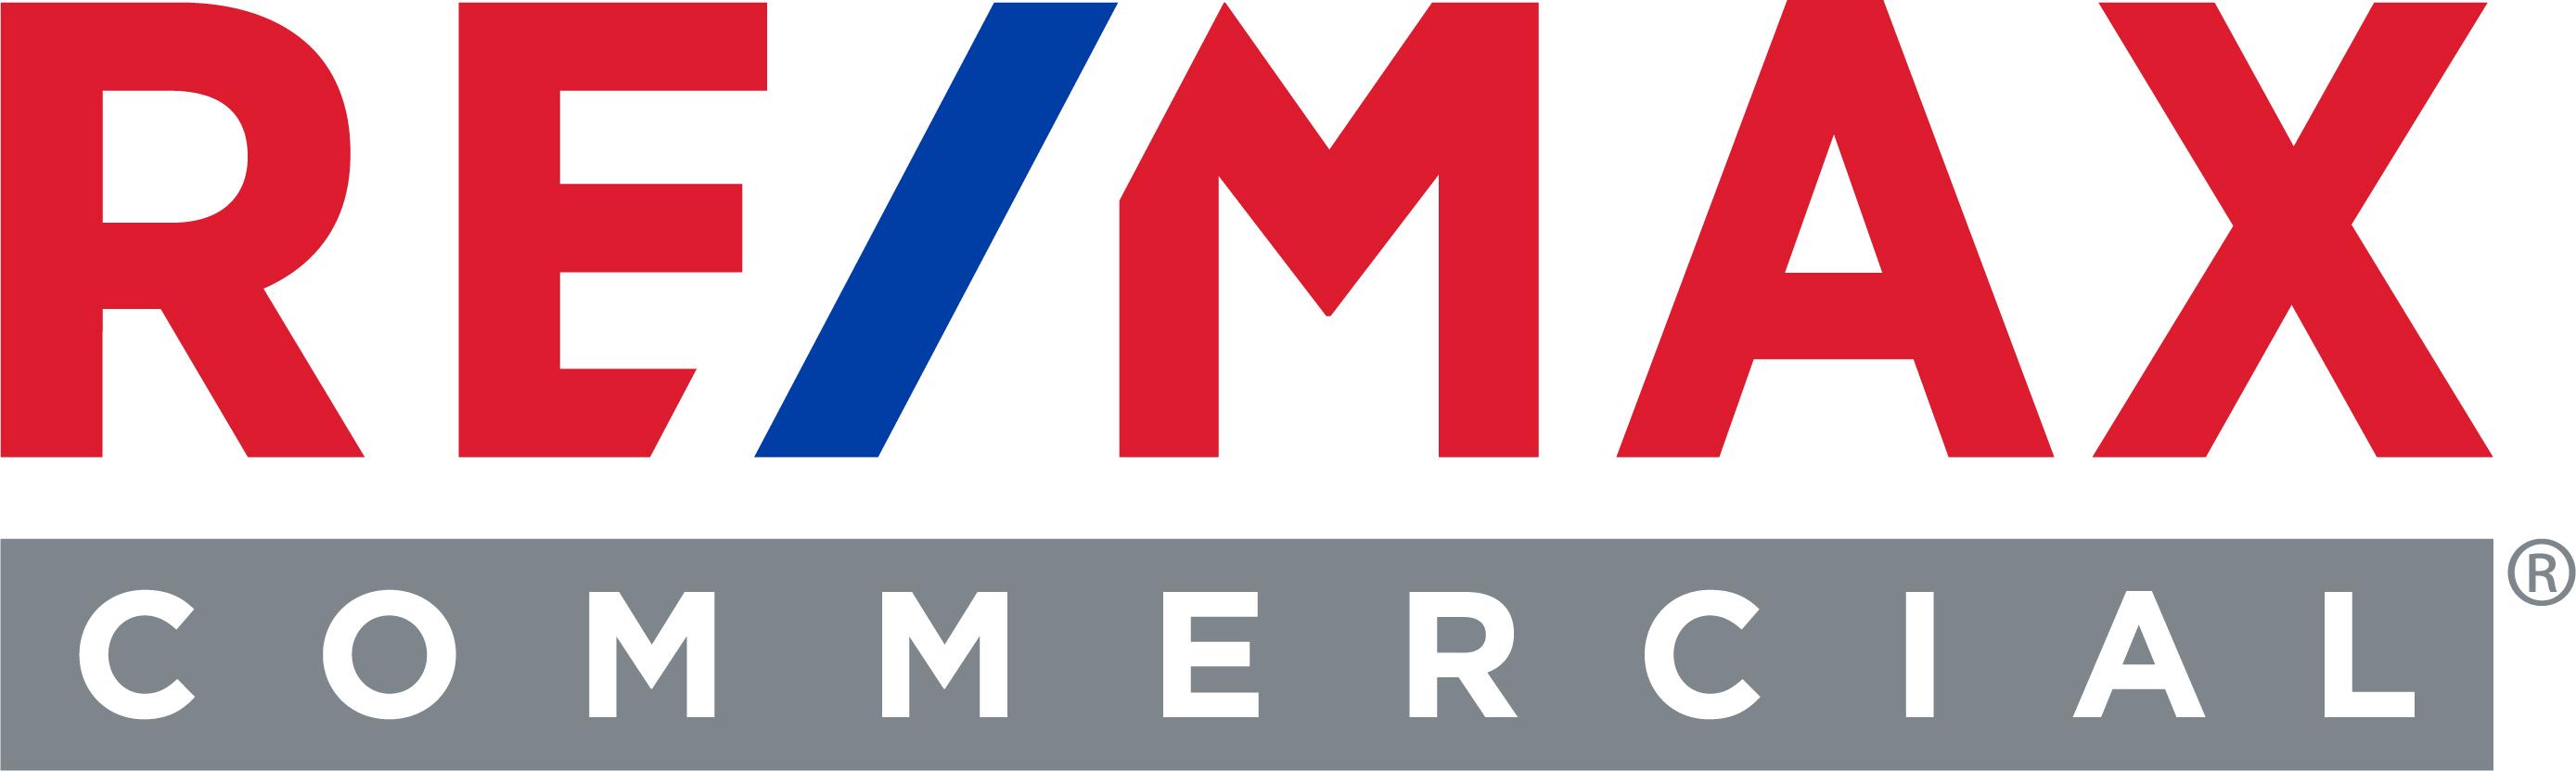 RE/MAX Logo - Logos | RE/MAX Newsroom